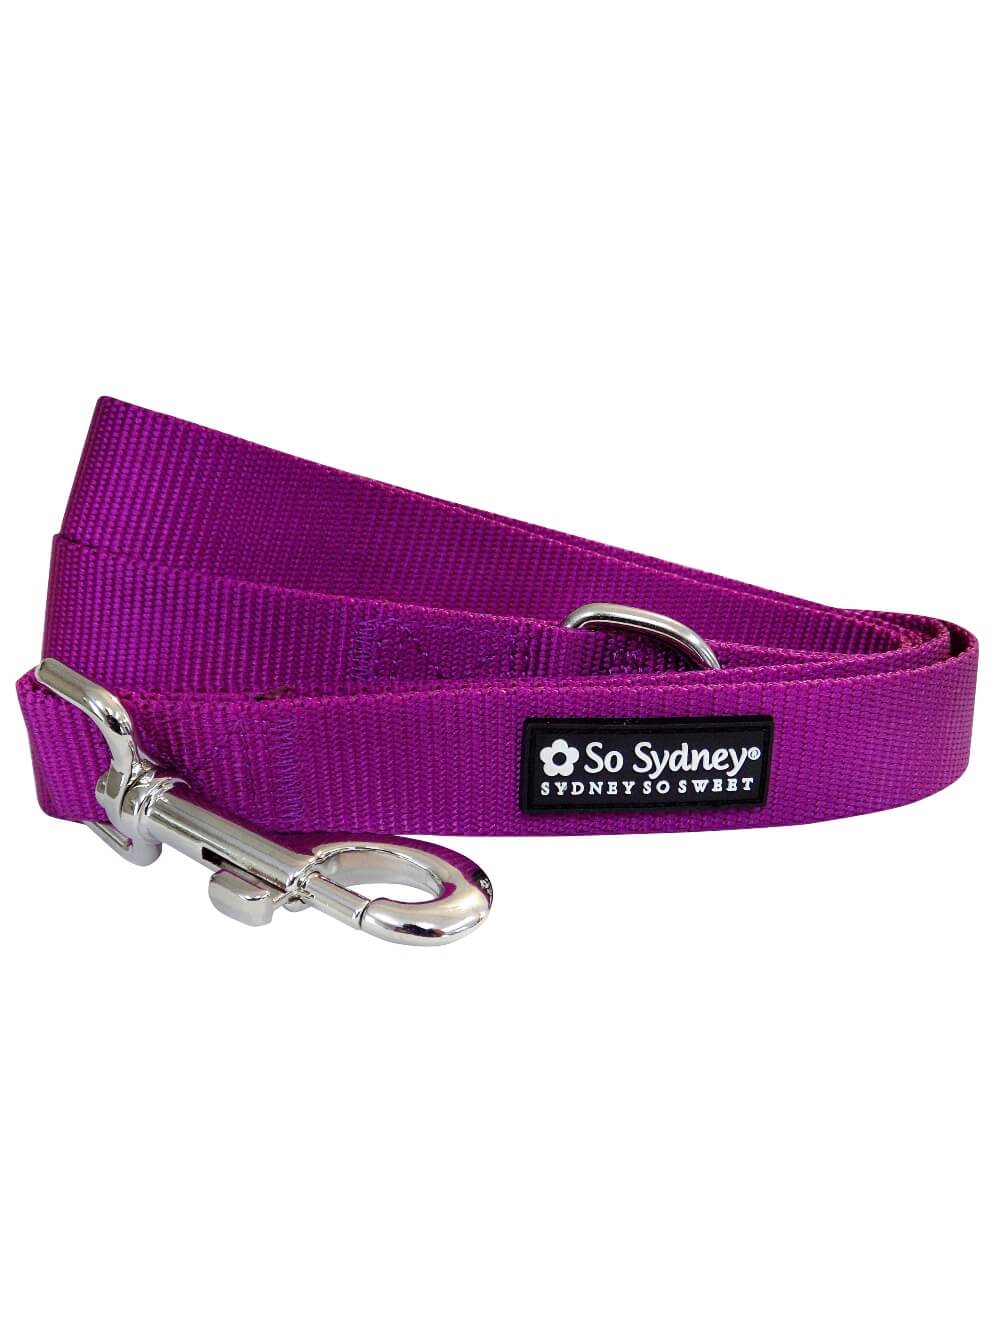 Grape Purple 5' Nylon Dog Leash for Small, Medium, or Large Dogs - Sydney So Sweet